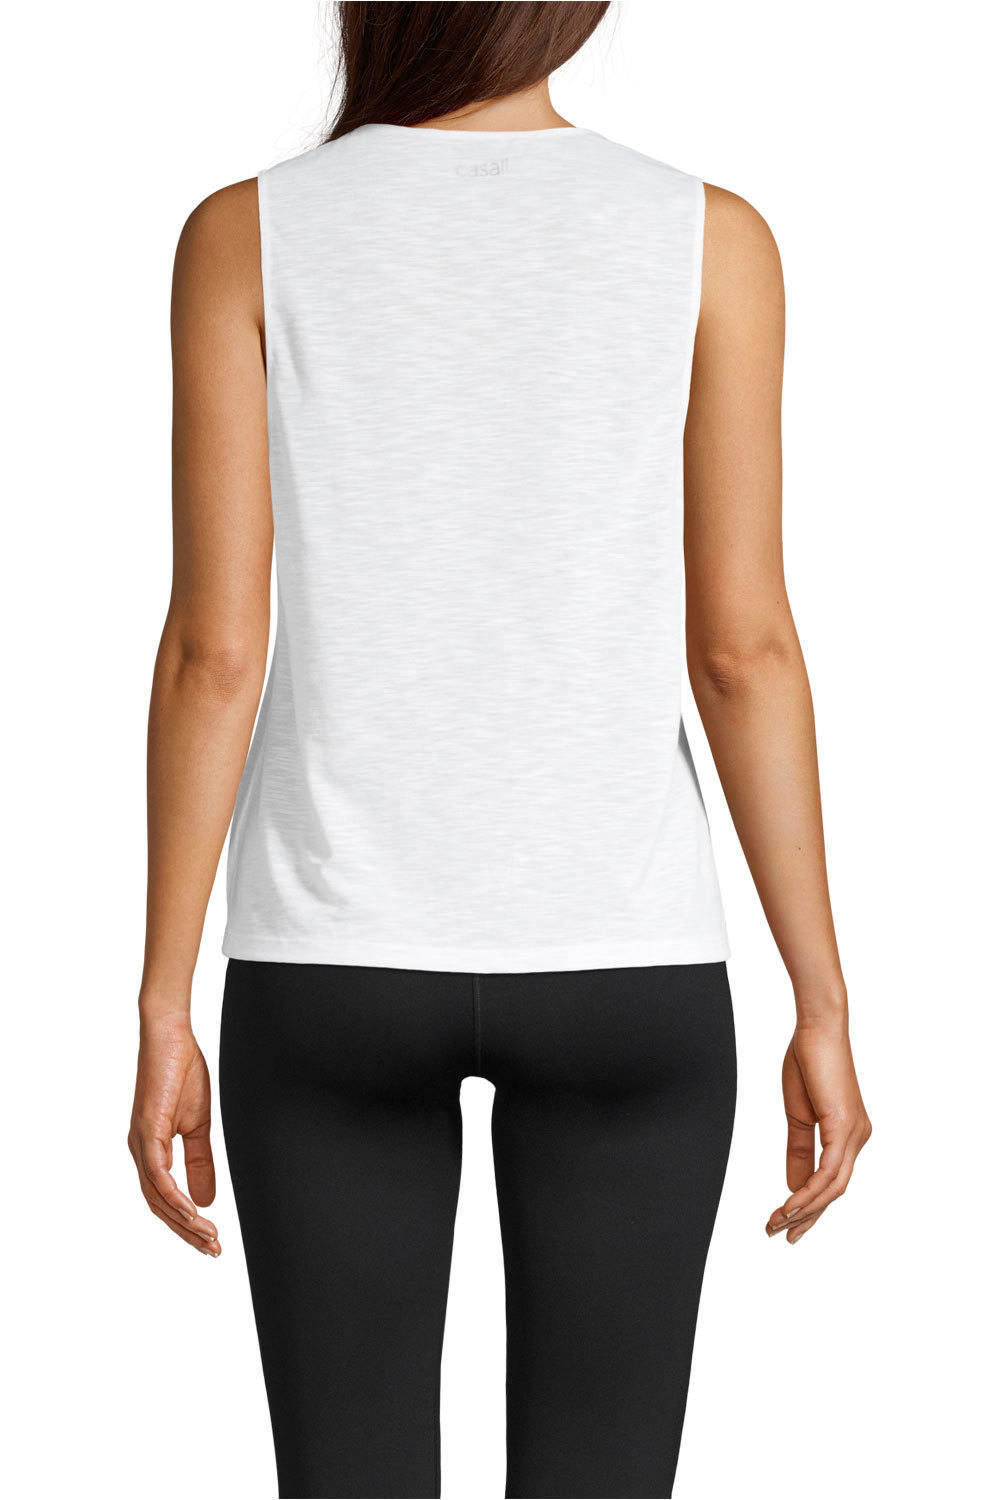 Casall Camiseta Tirantes Yoga Casall Essential Texture Tank vista trasera